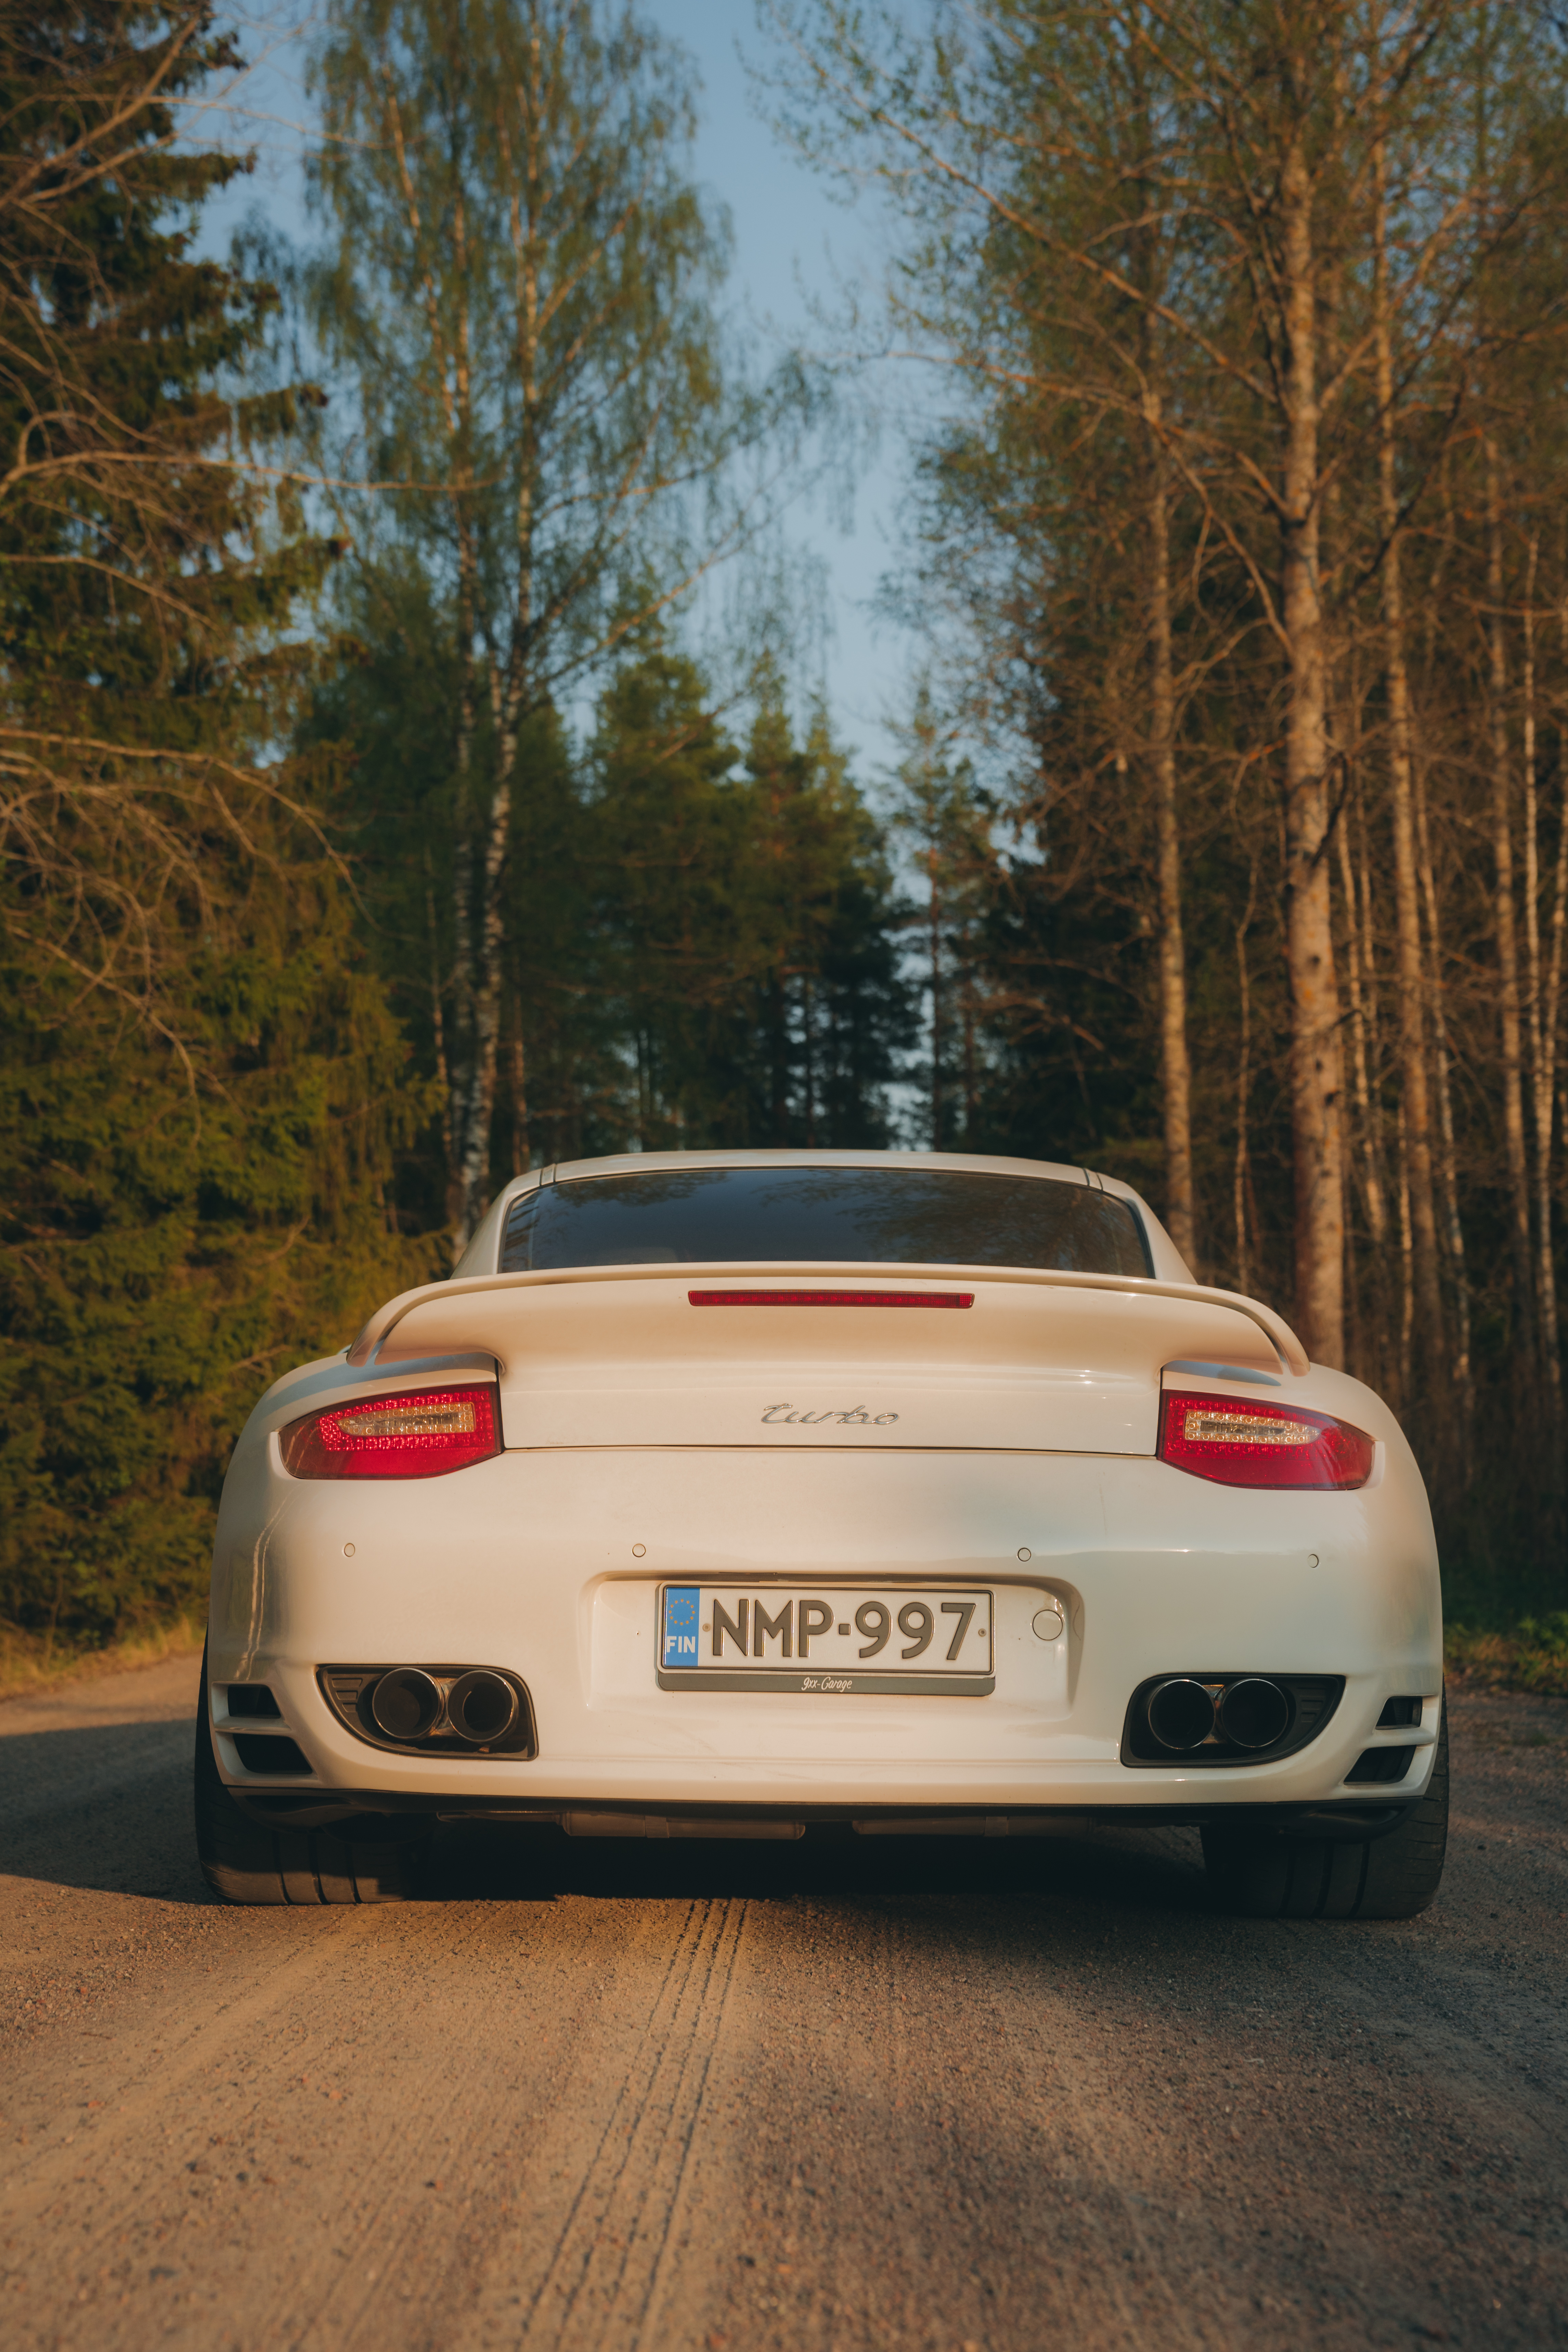 White Porsche 911 Turbo (type 997) in a Finnish forest